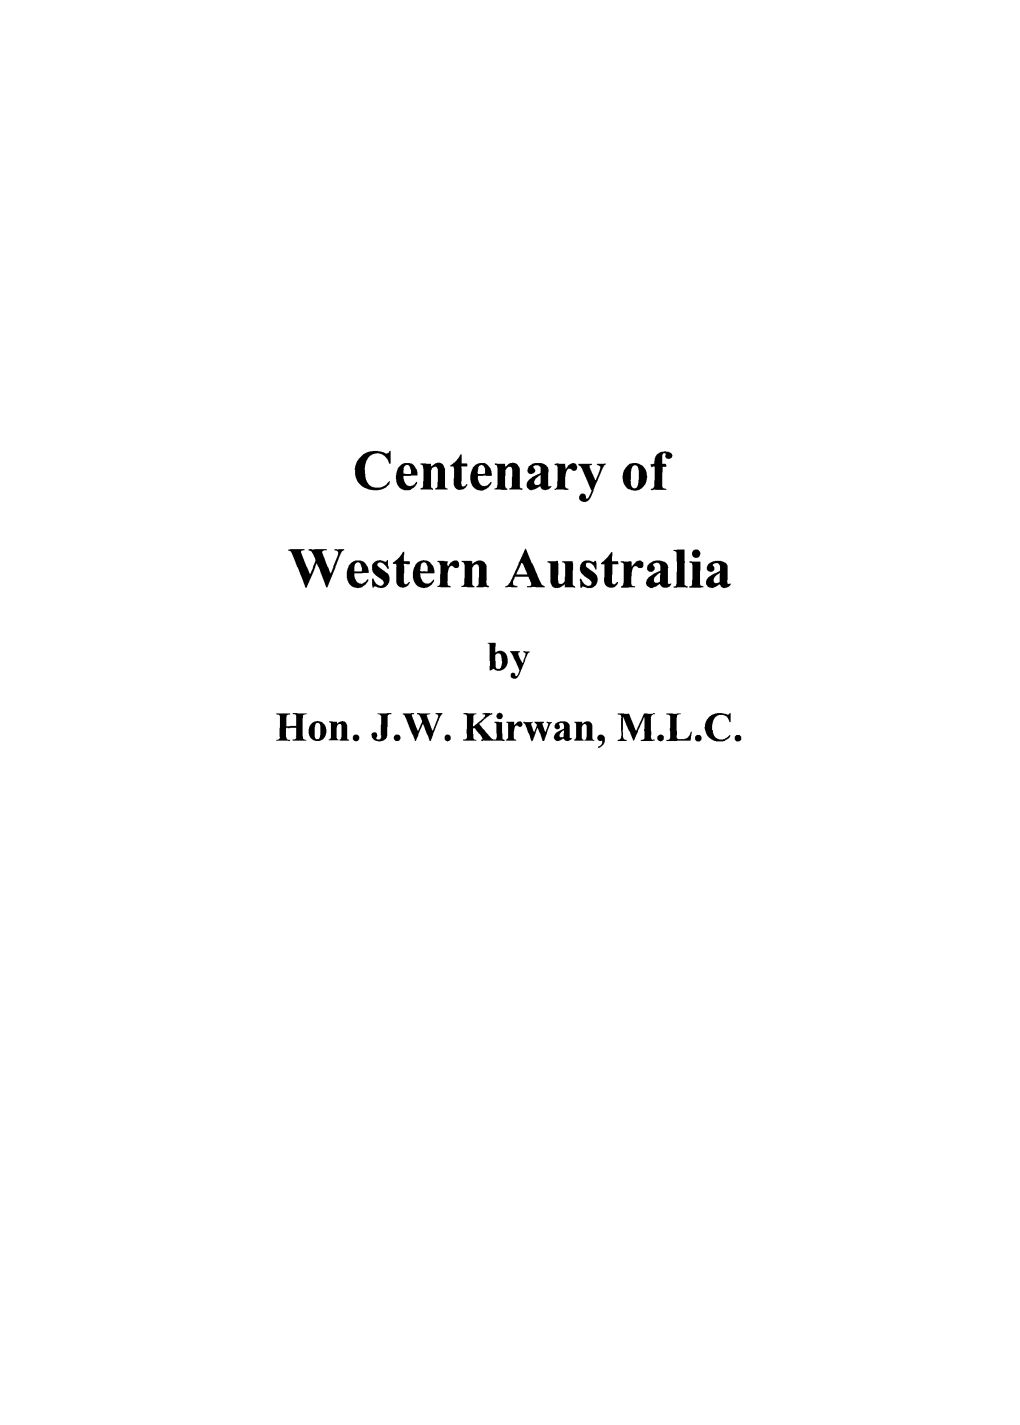 Centenary of Western Australia by Hon